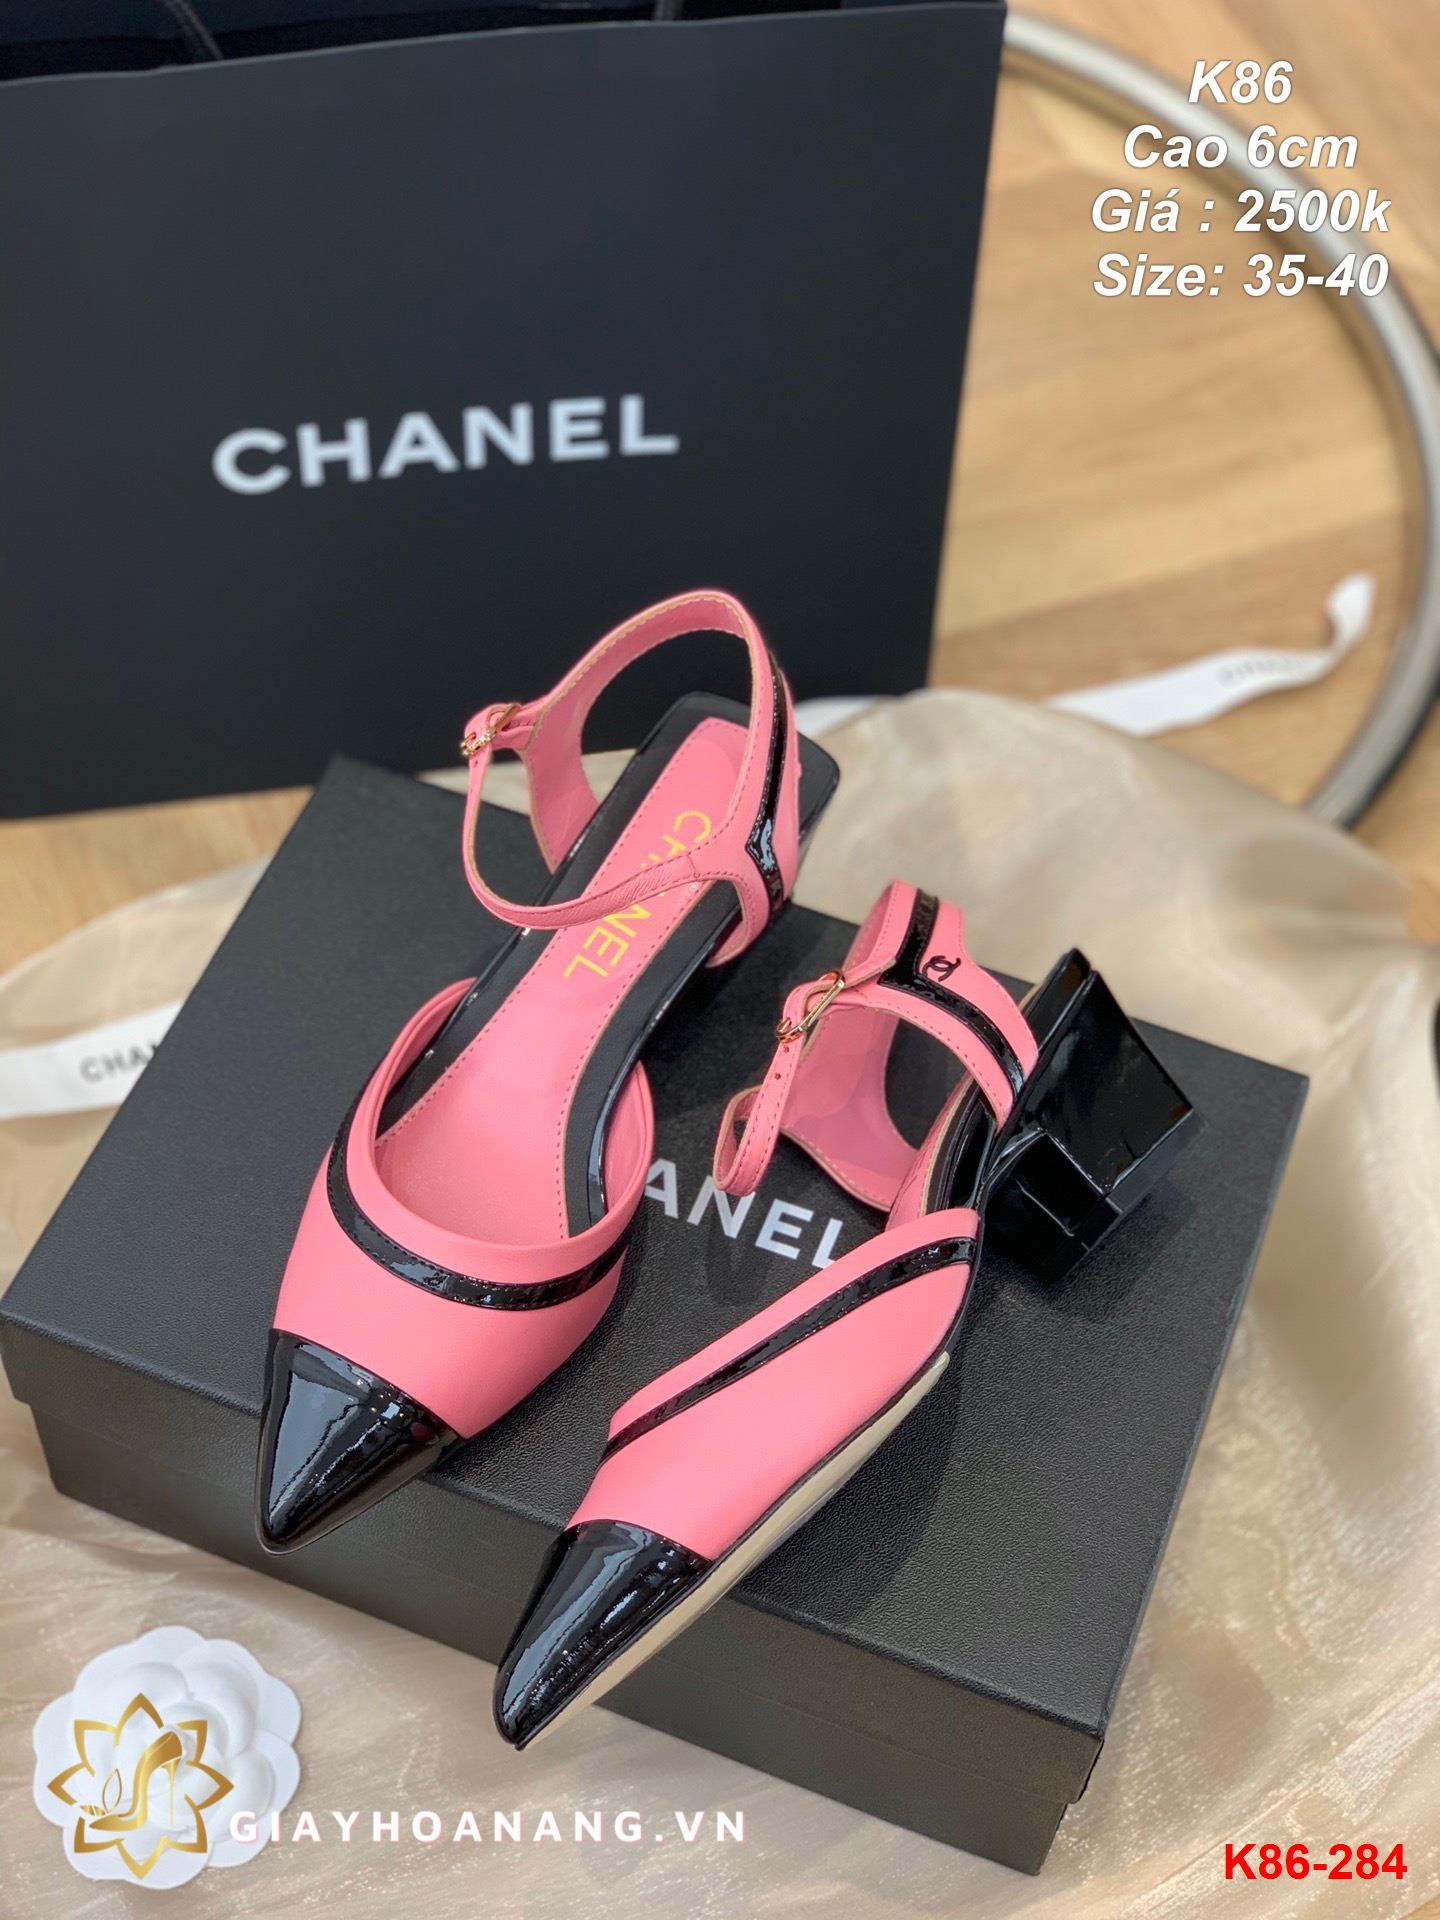 K86-284 Chanel sandal cao 6cm siêu cấp